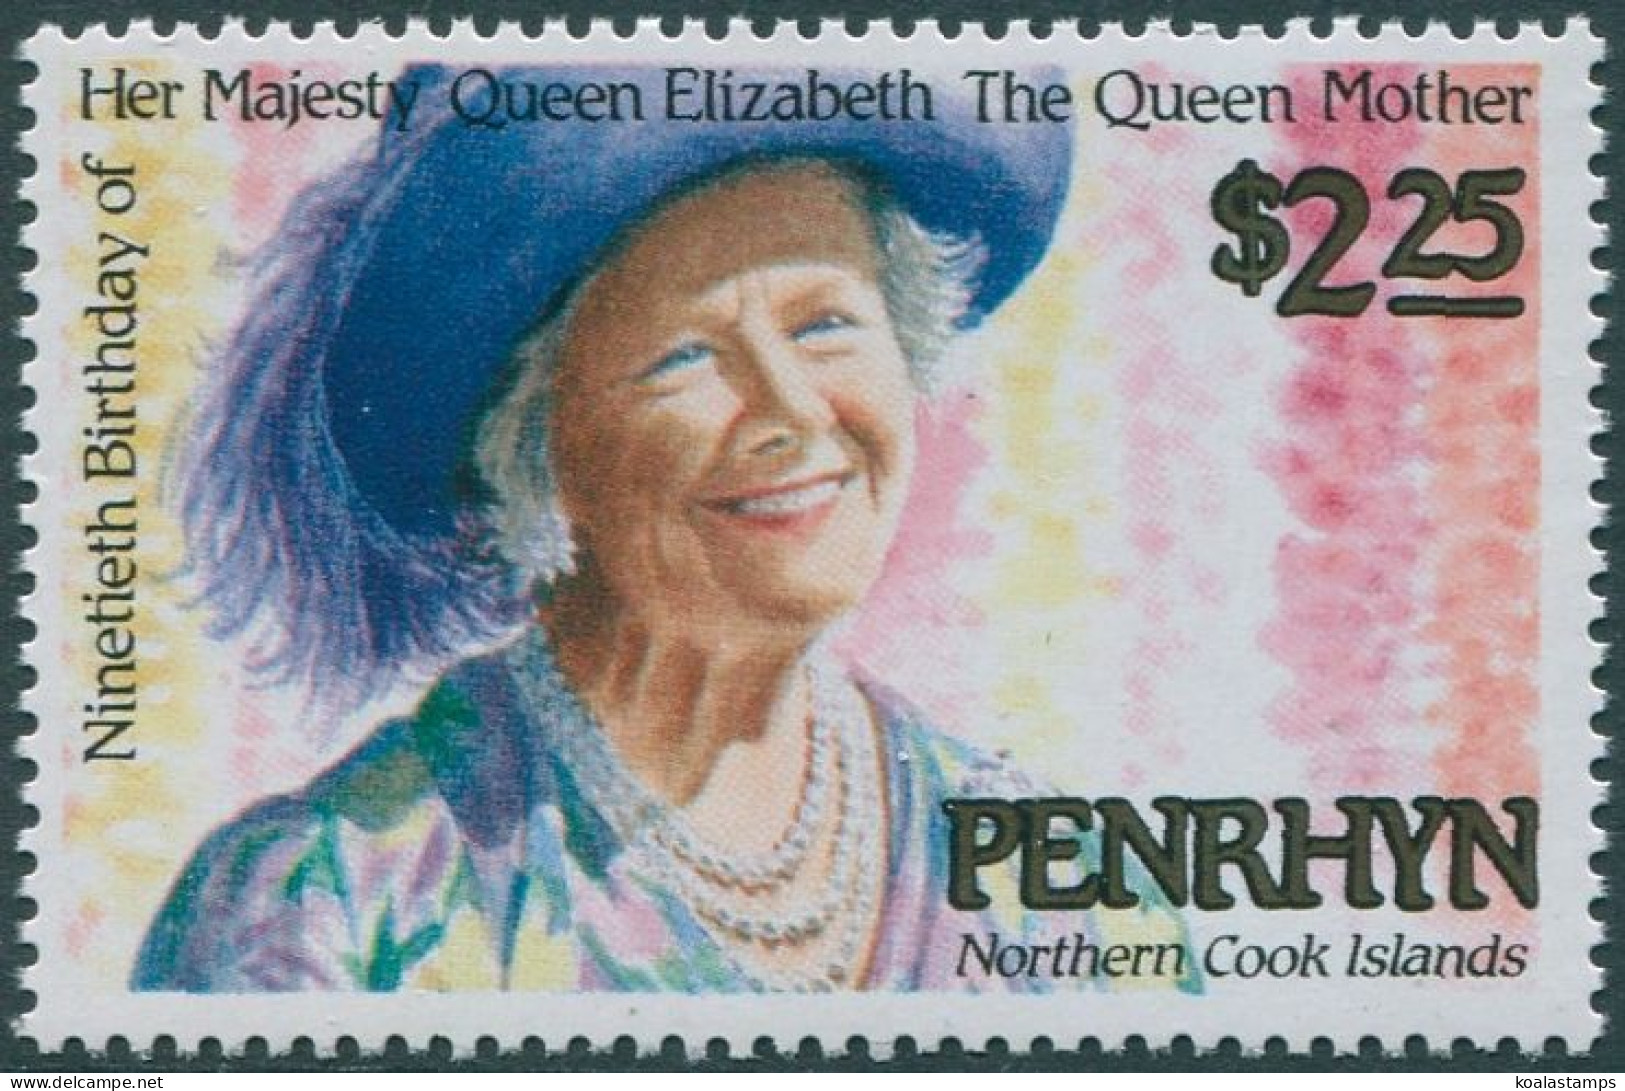 Cook Islands Penrhyn 1990 SG445 $2.25 Queen Mother 90th Birthday MNH - Penrhyn